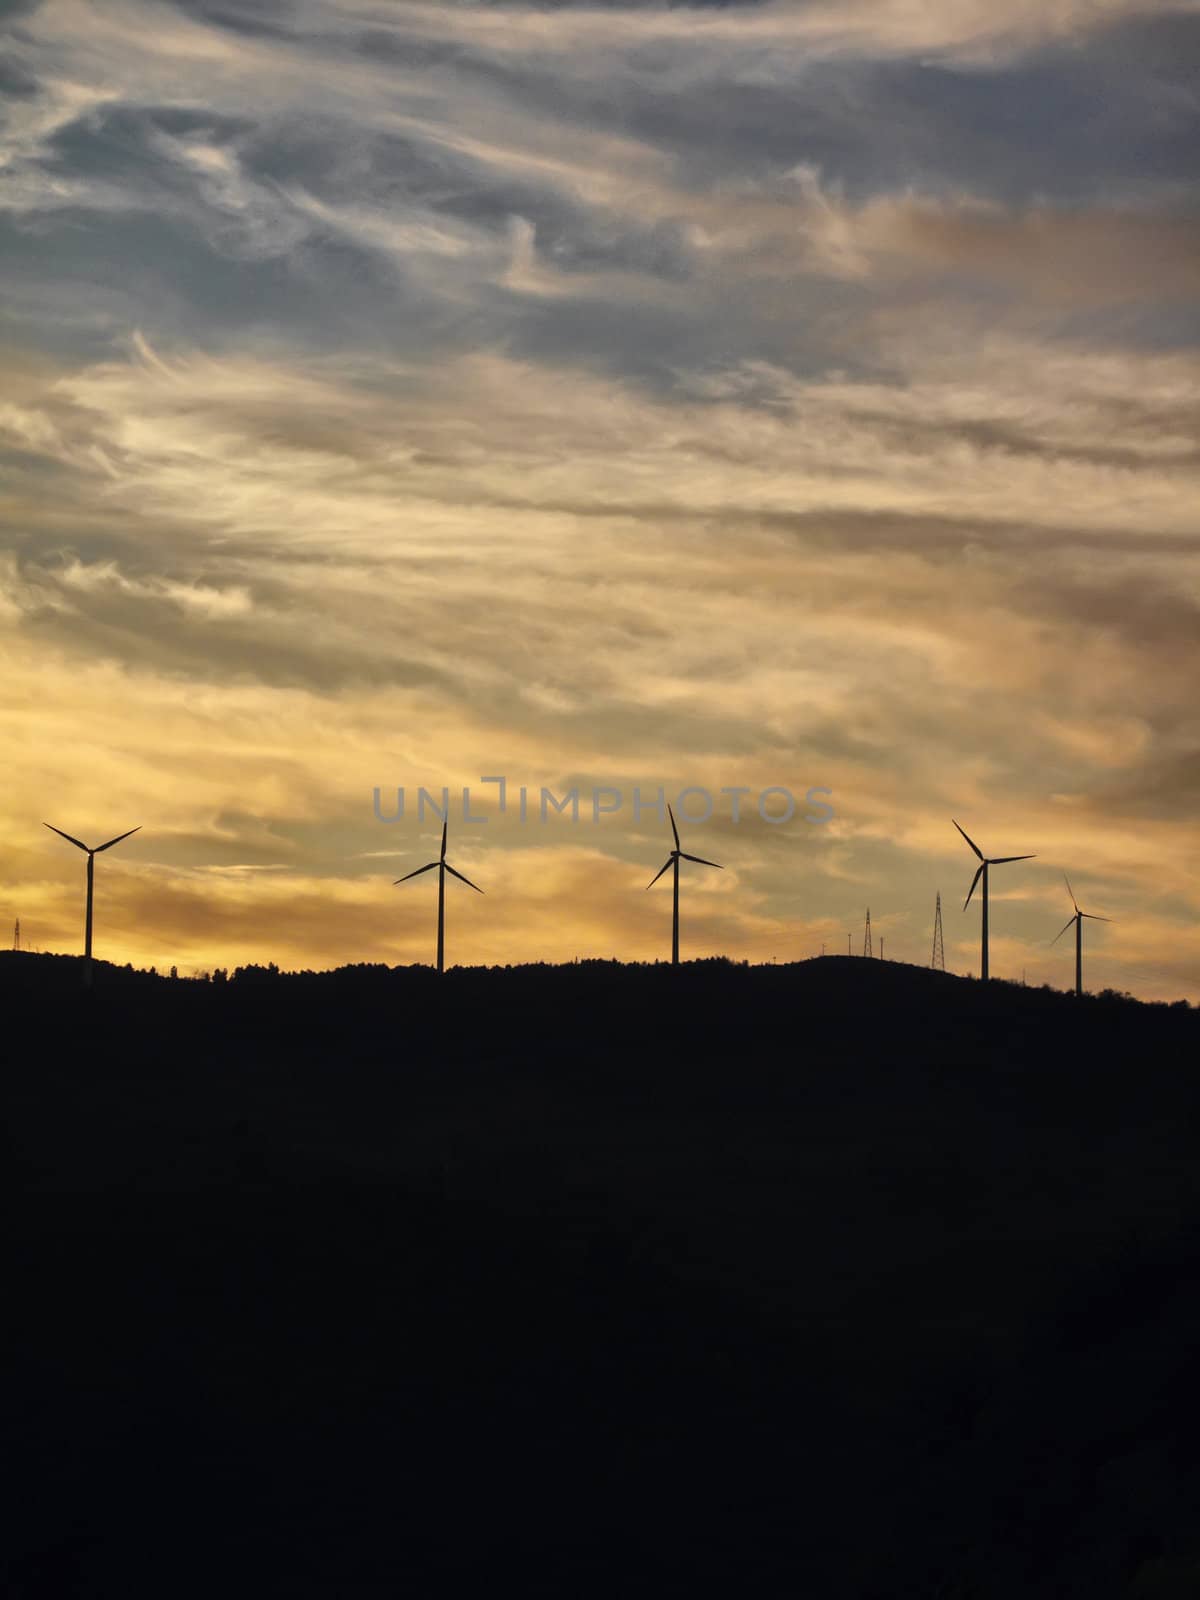  ITALY, Campania, Salerno, countryside, Eolic energy turbines by agiampiccolo